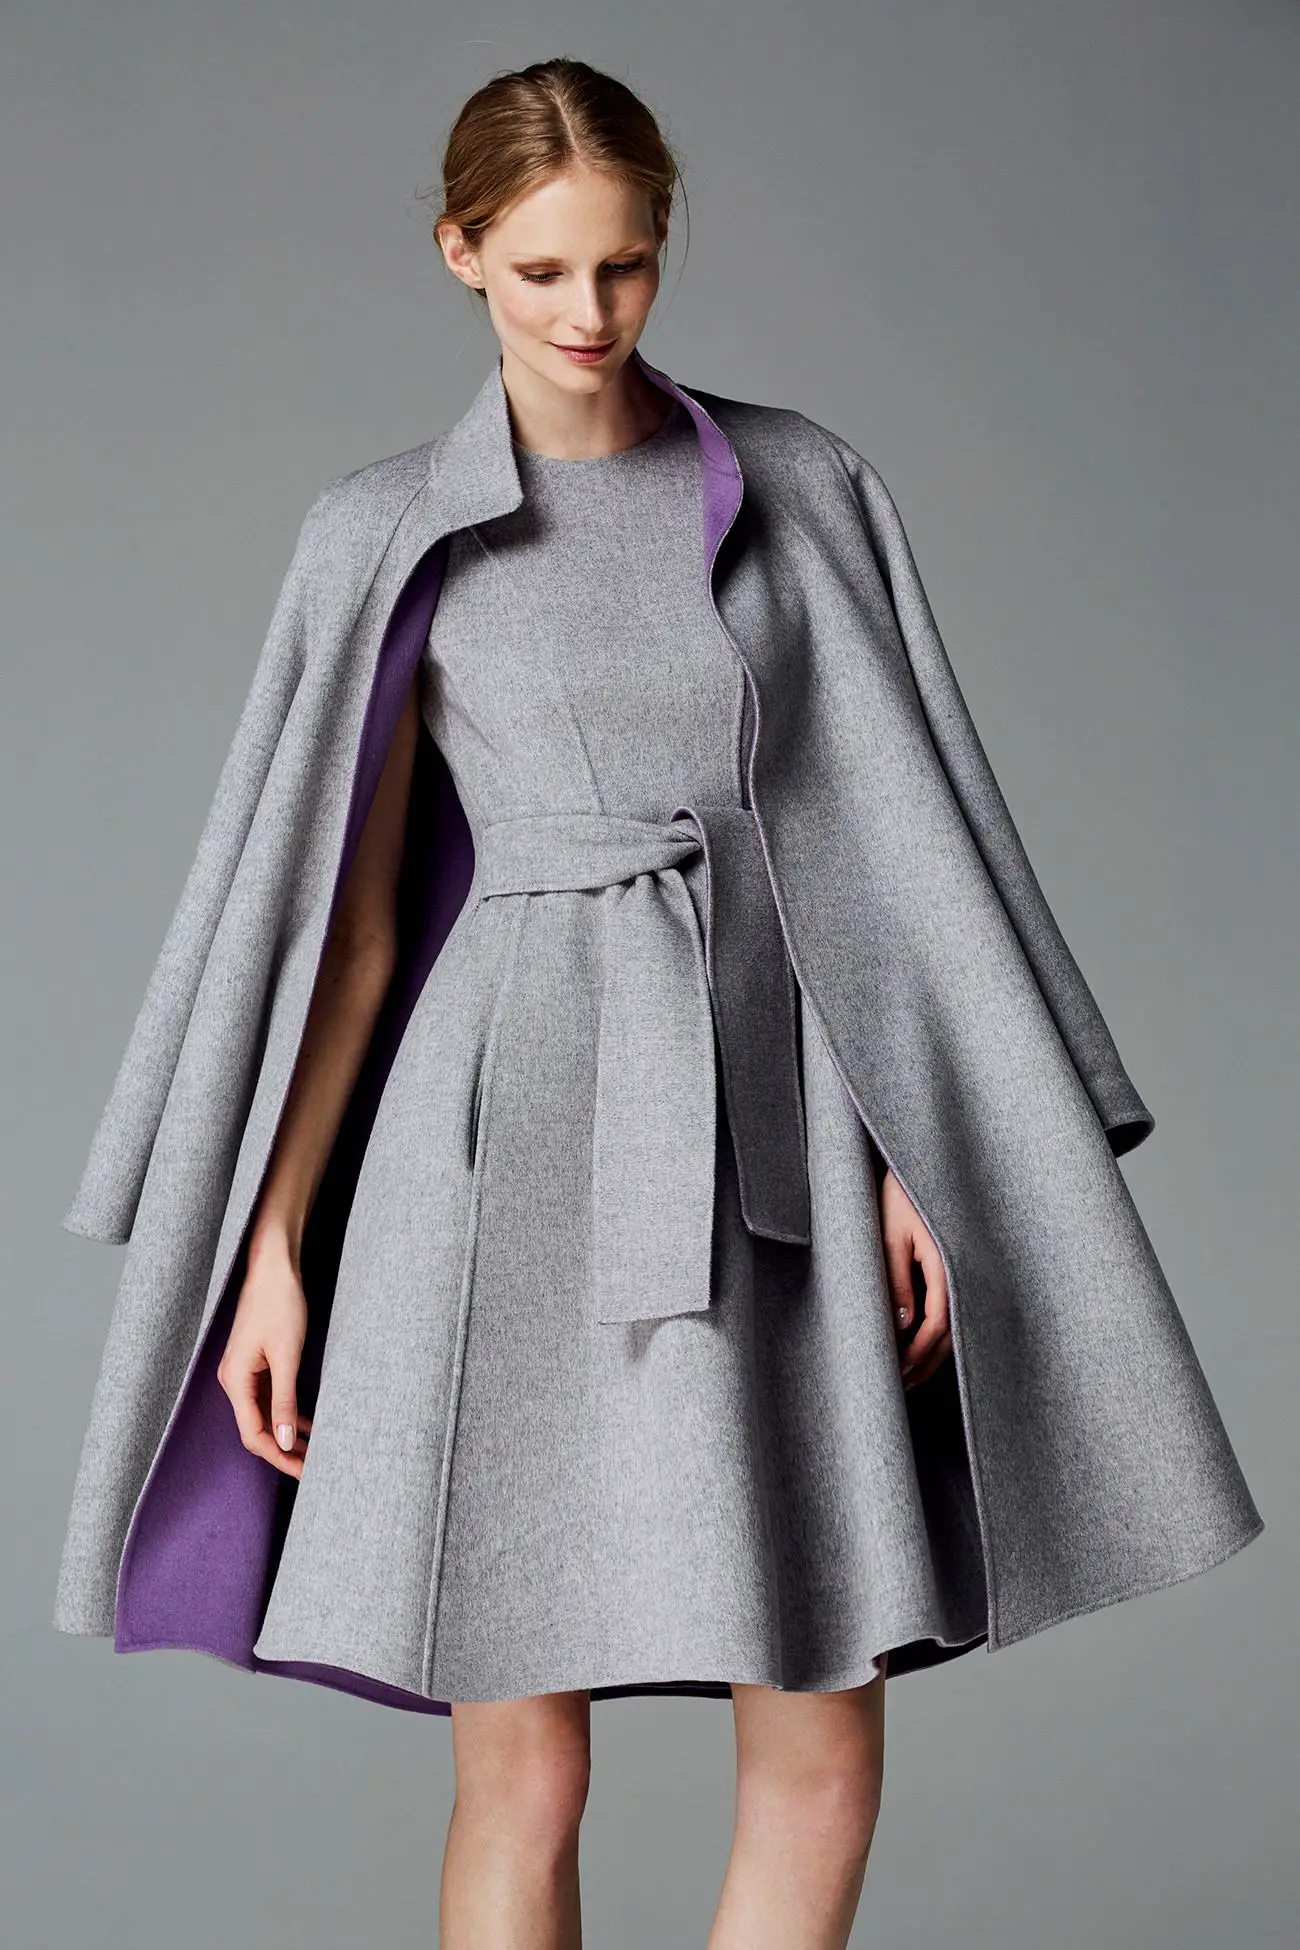 Queen Letiiza Carolina Herrera double wool gray-purple coat